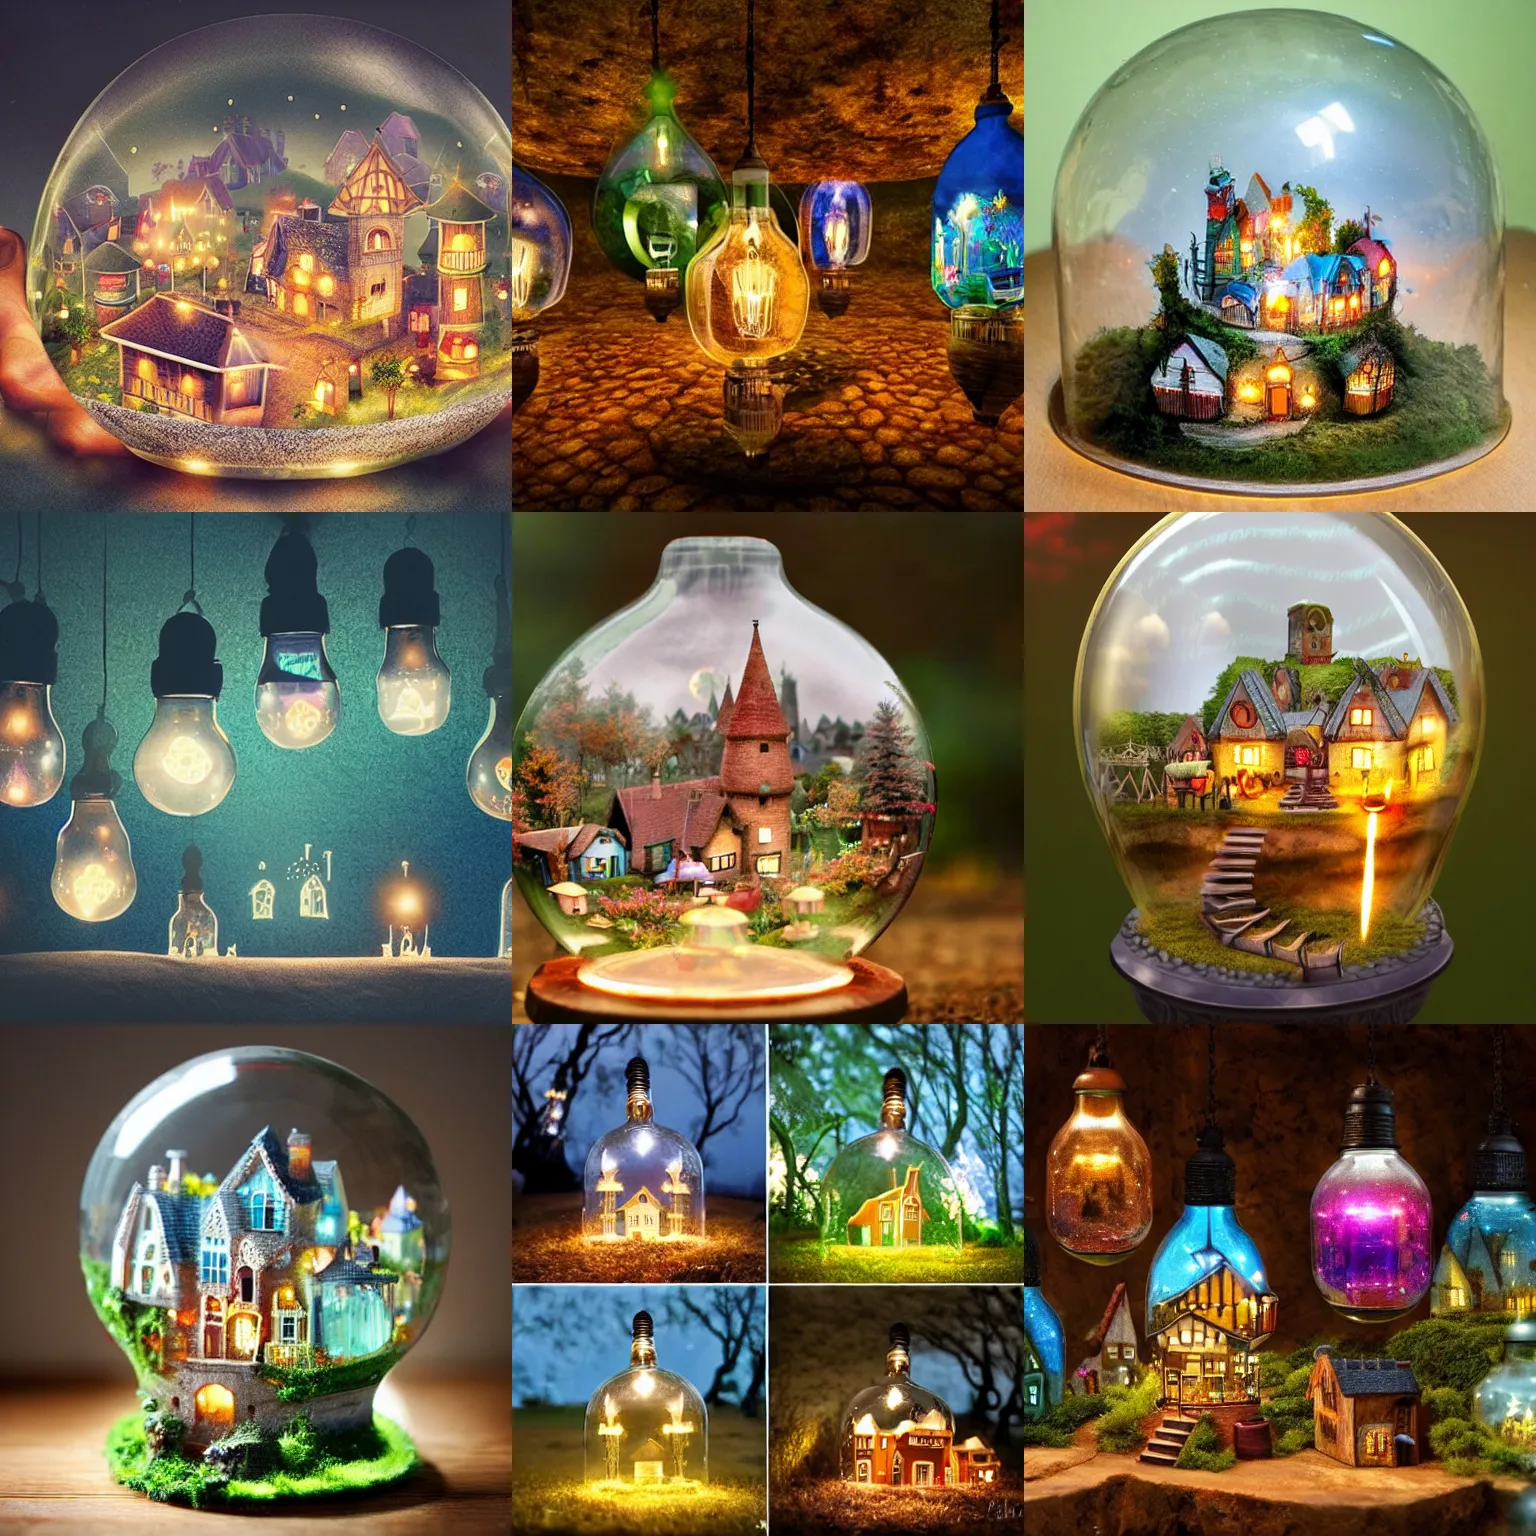 Prompt: magical fantasy village inside a glass lightbulb